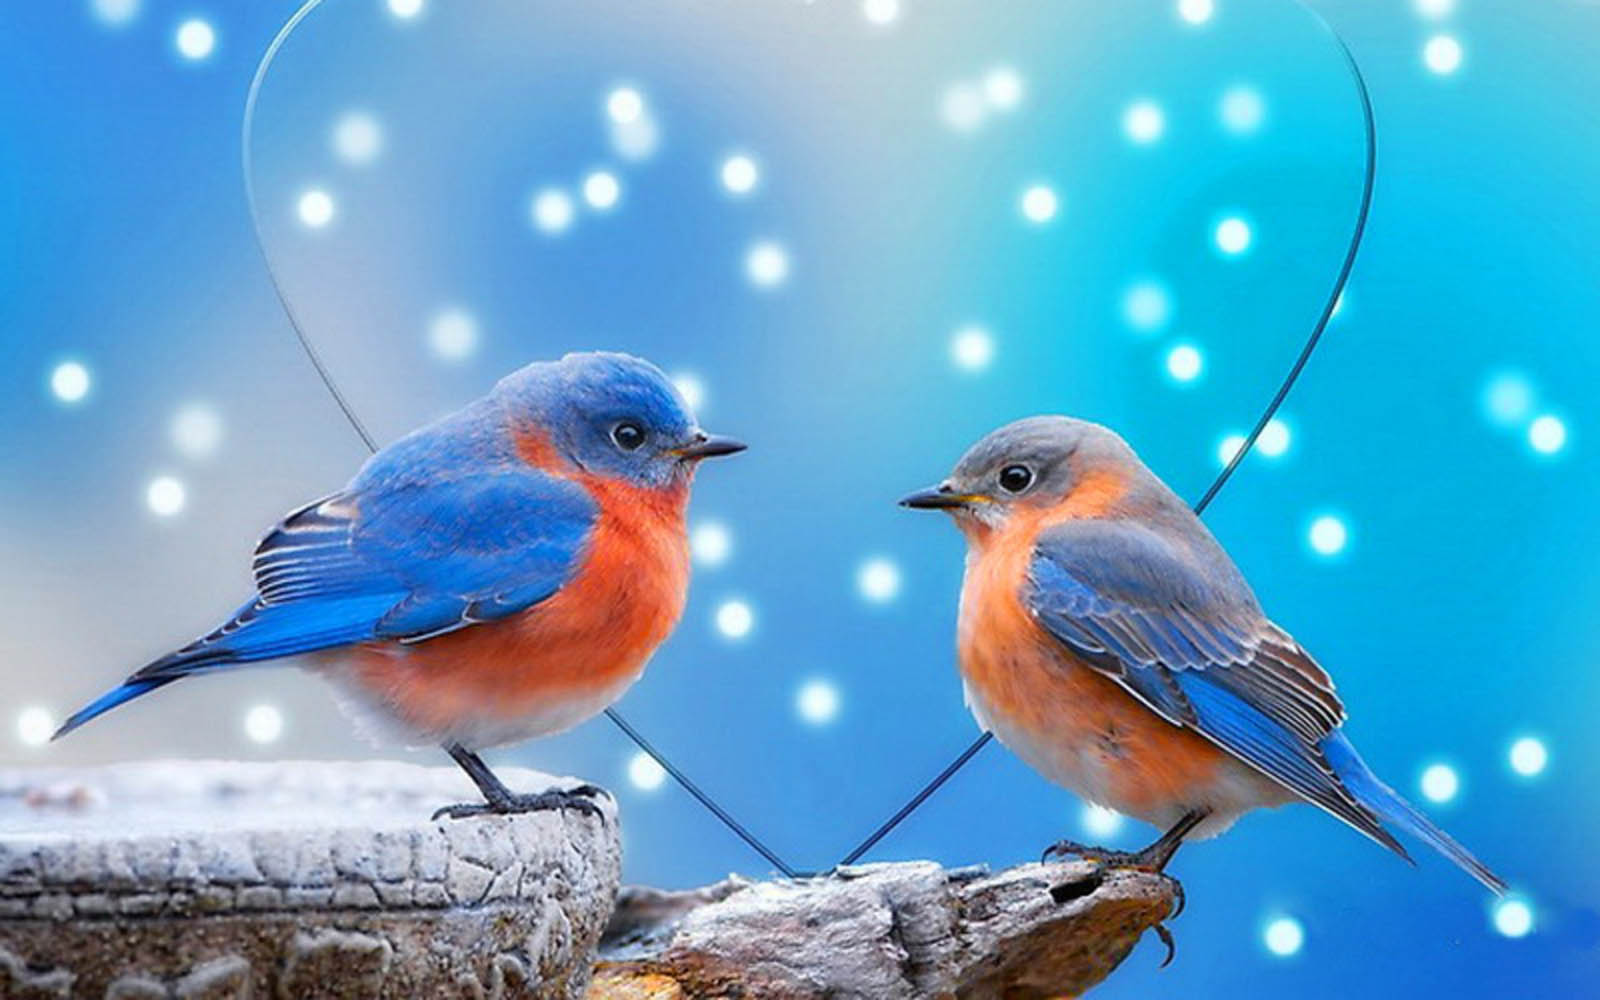 Blue Love Birds